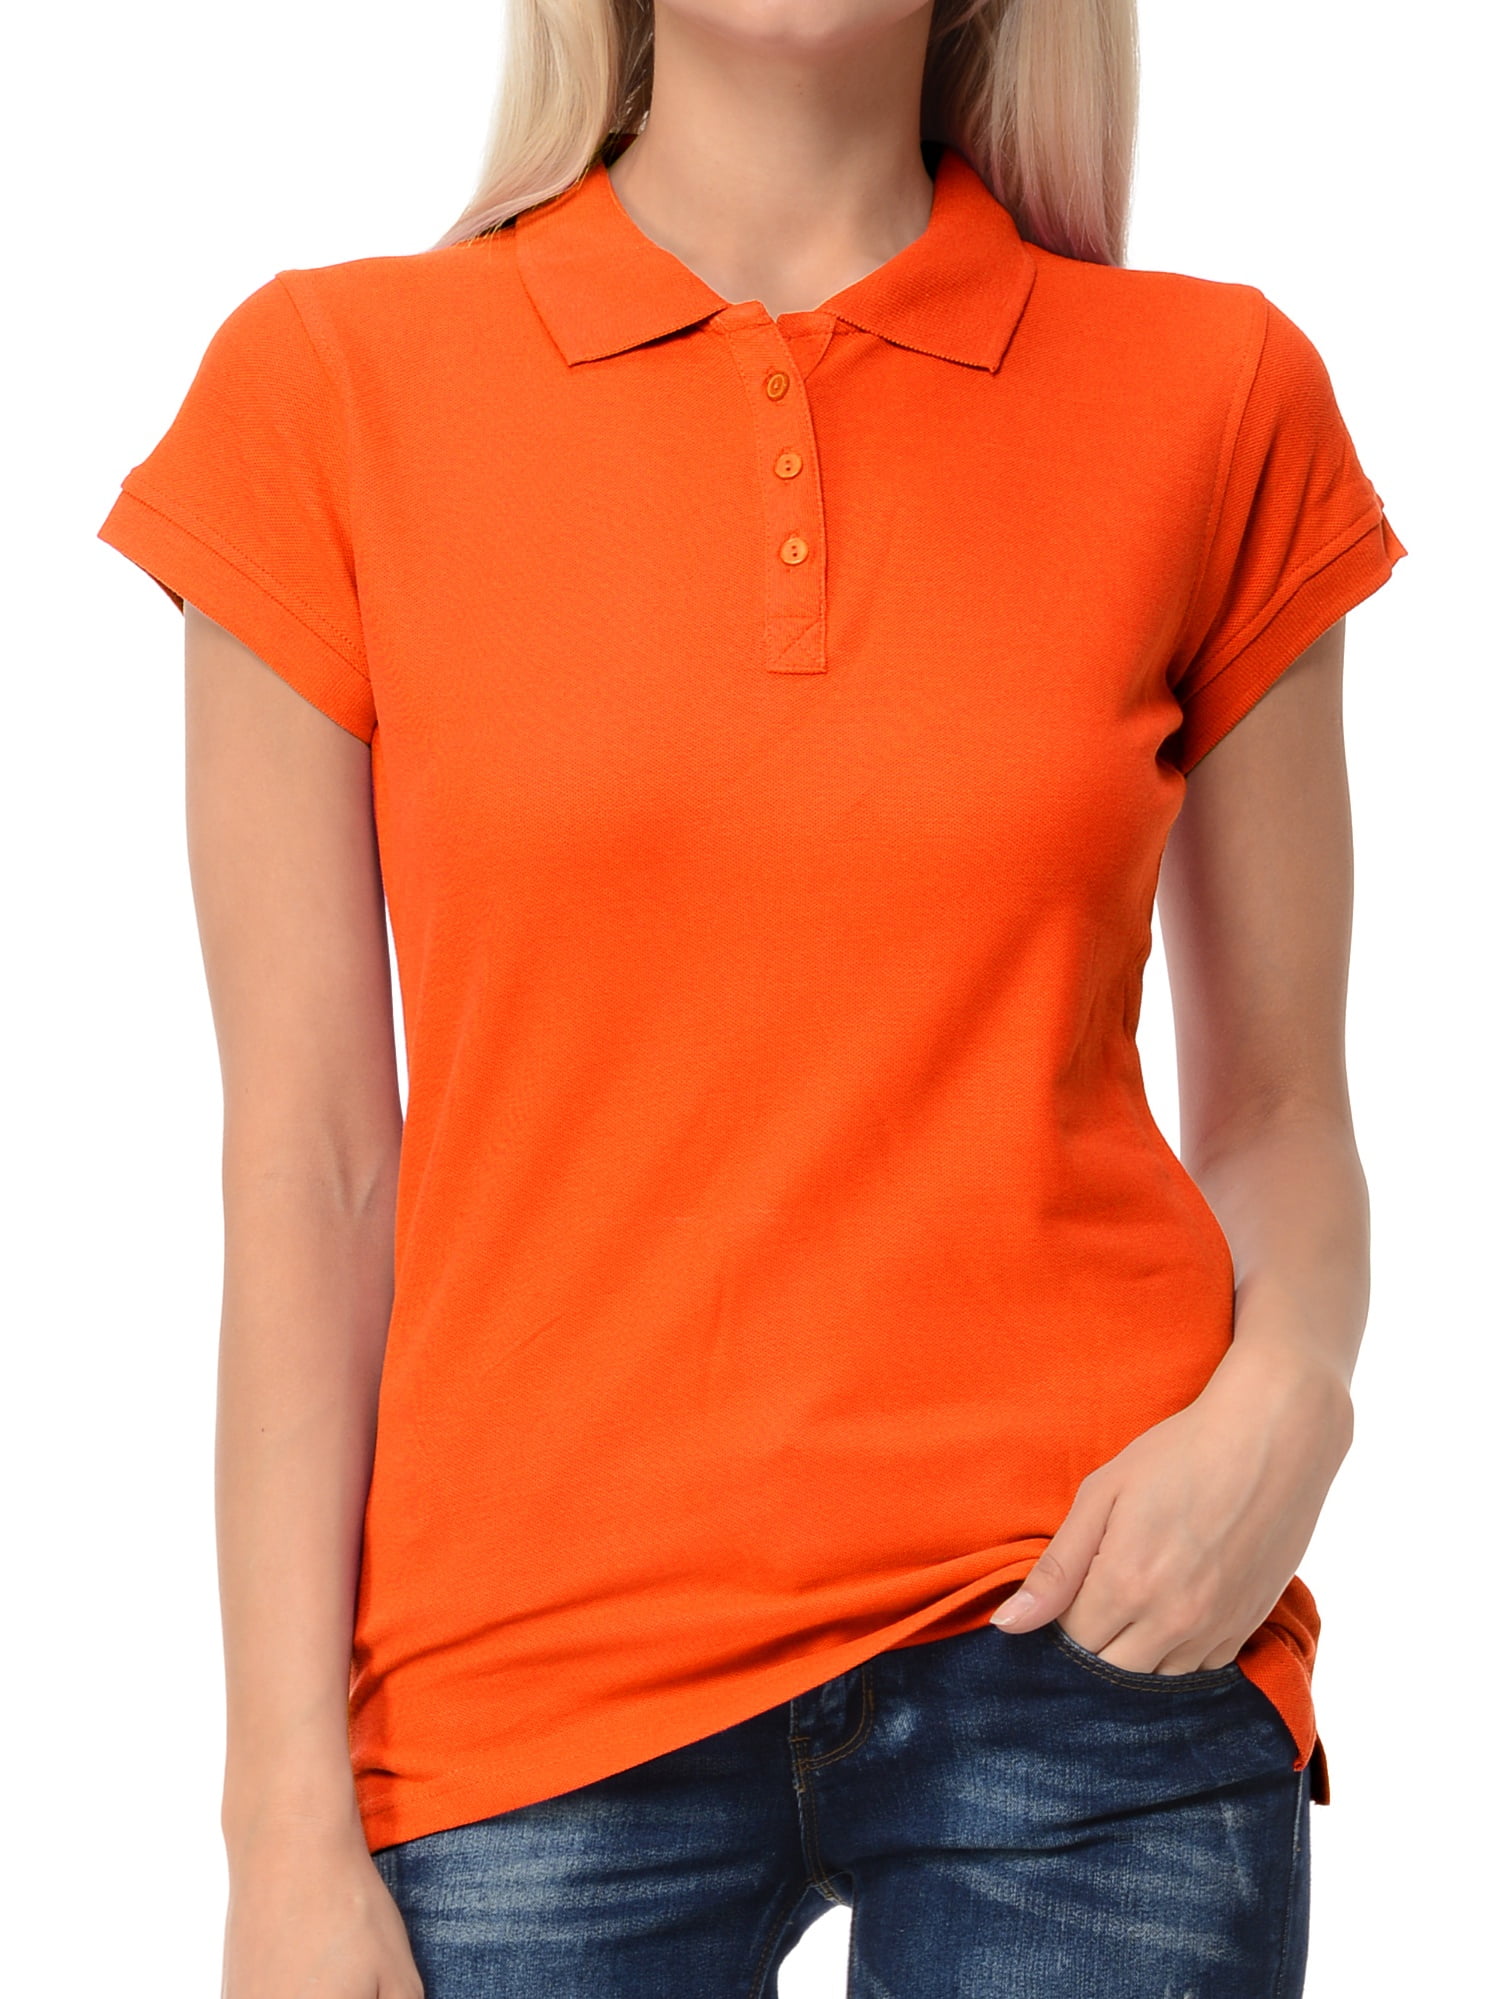 Basico - Basico Orange Polo Collared Shirts For Women 100% Cotton Short ...